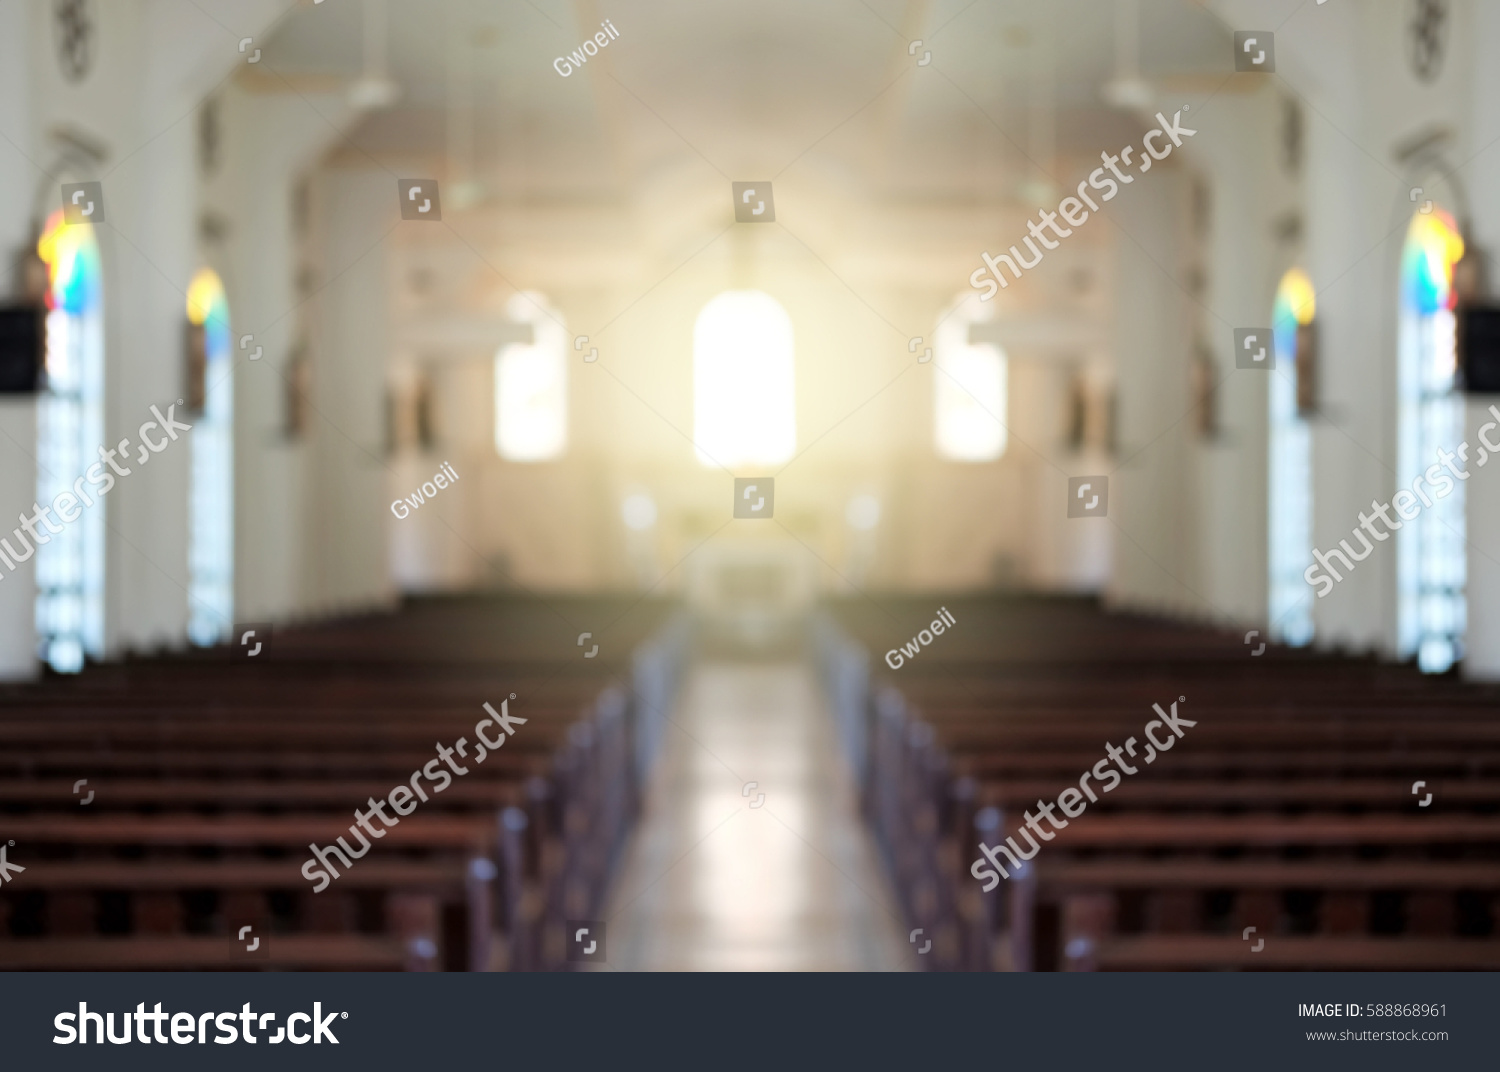 Blurred background of a surreal illuminated church aisle.
 #588868961